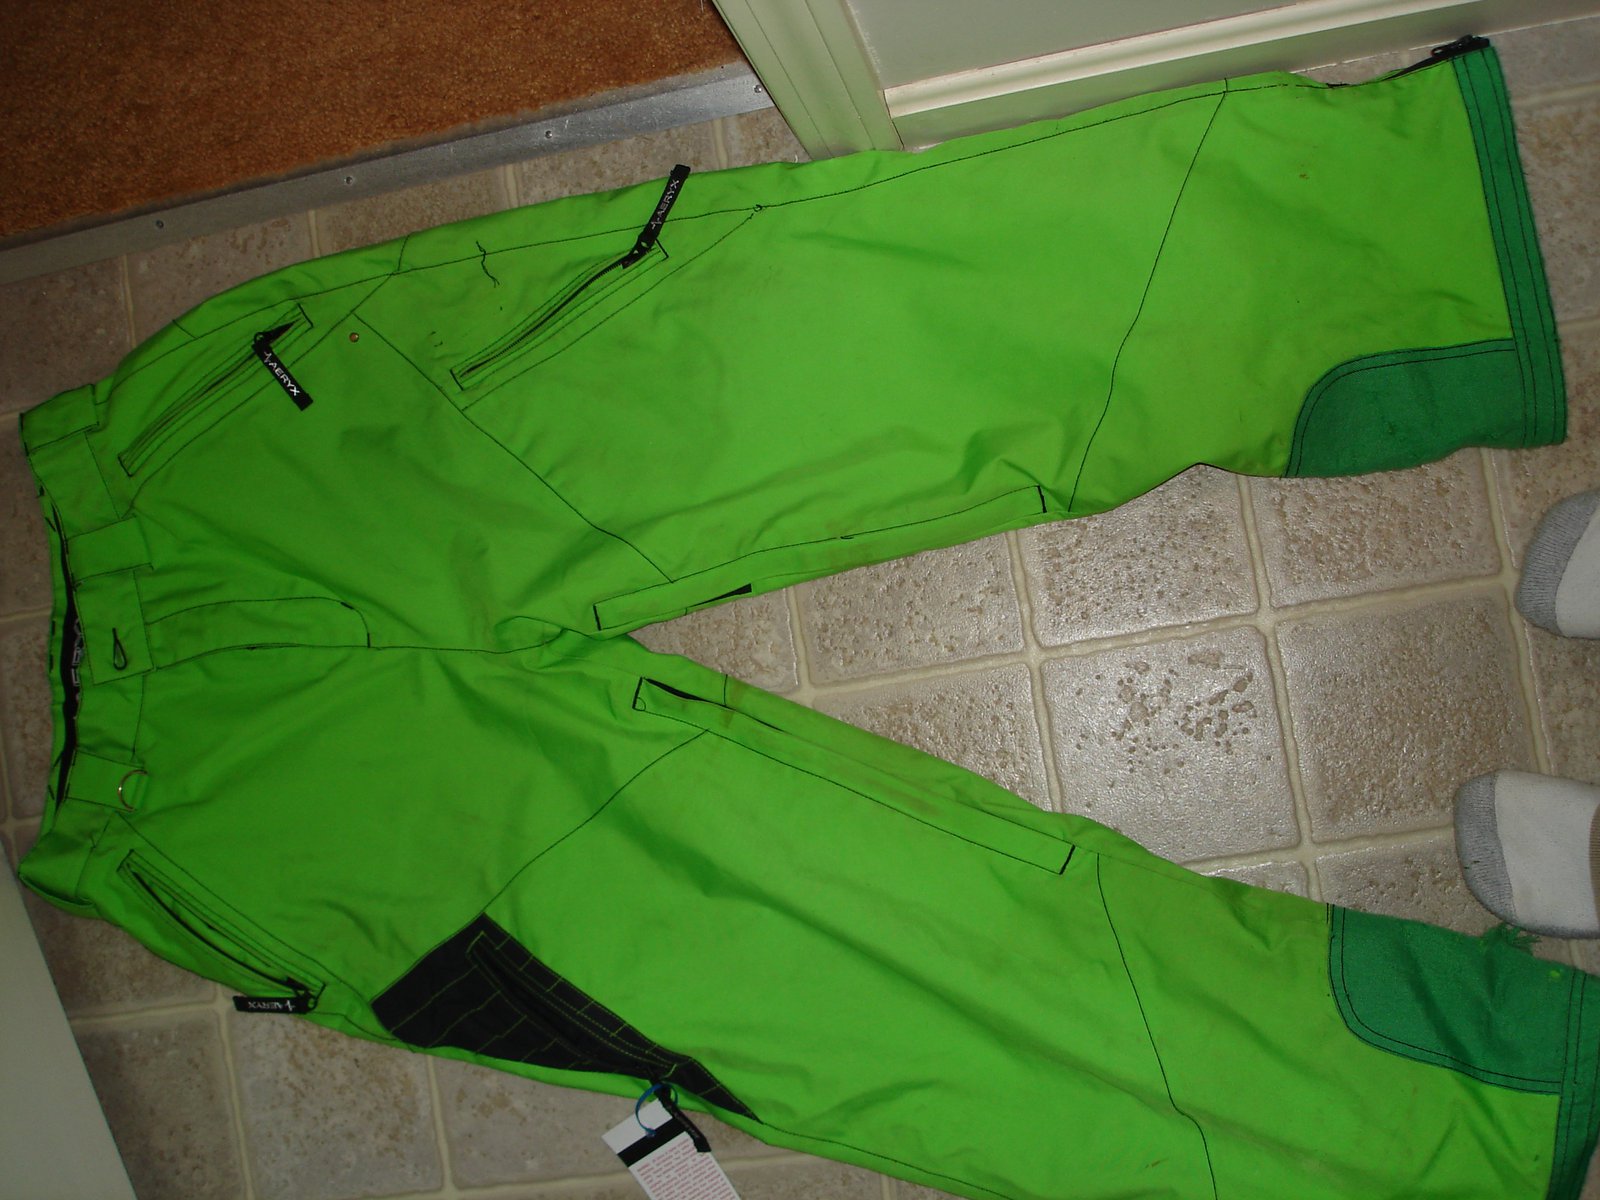 The green pants (aeryx small)